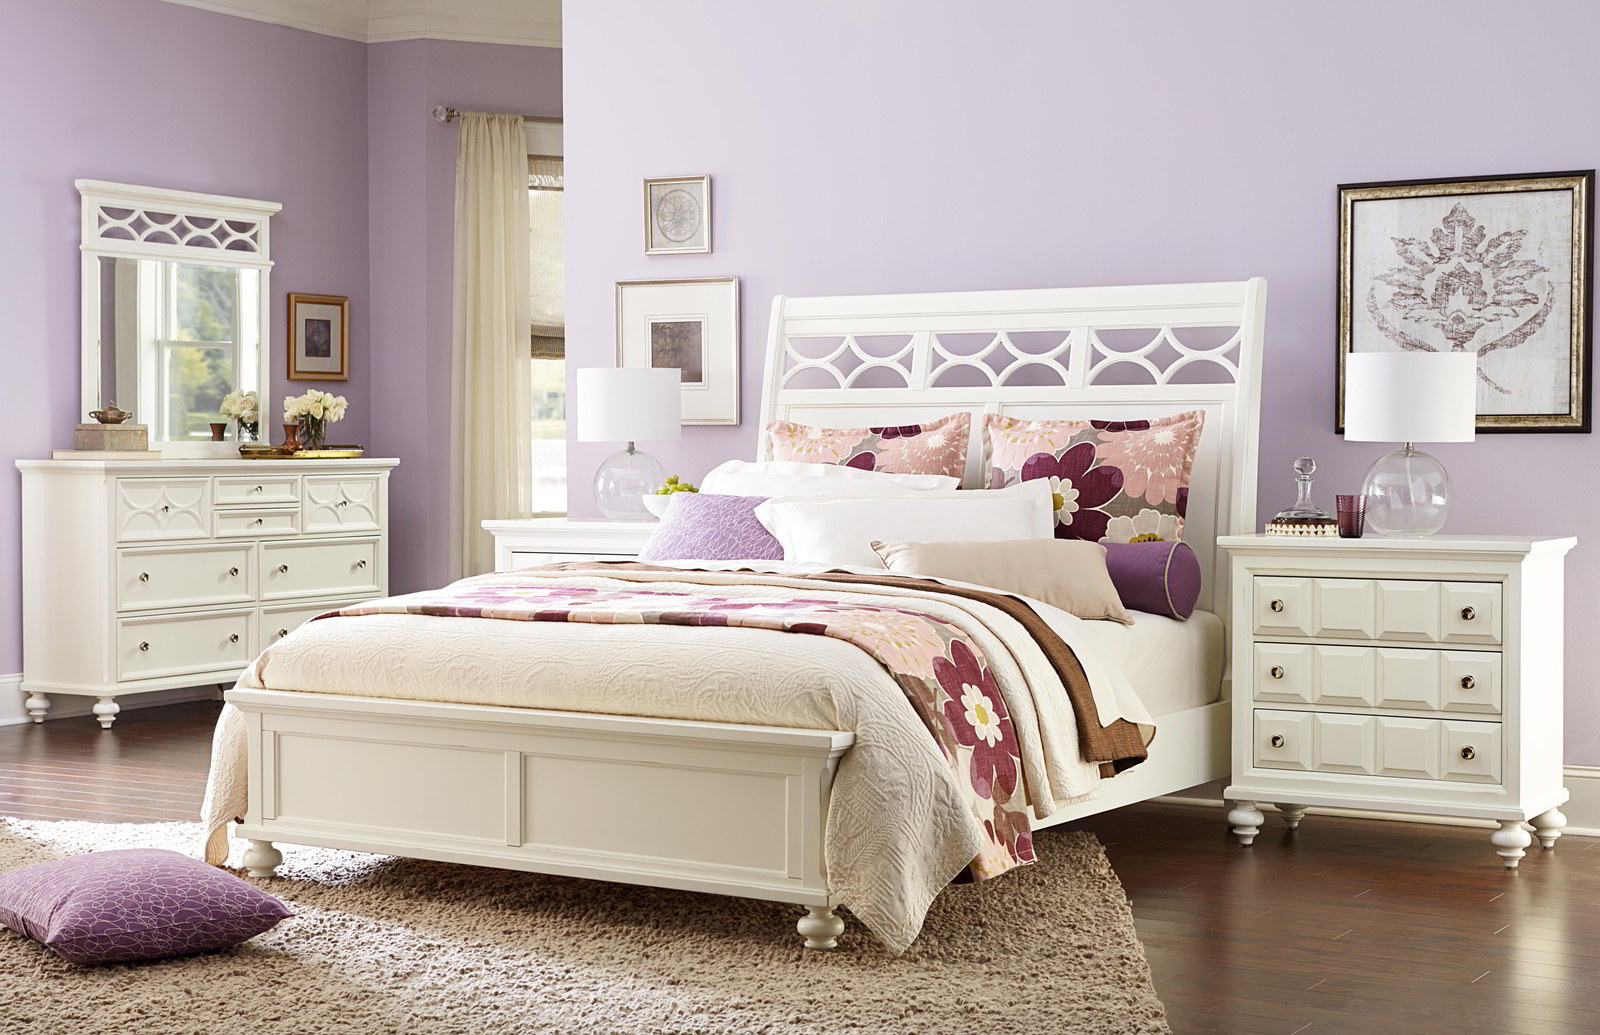 lynn's bedroom furniture